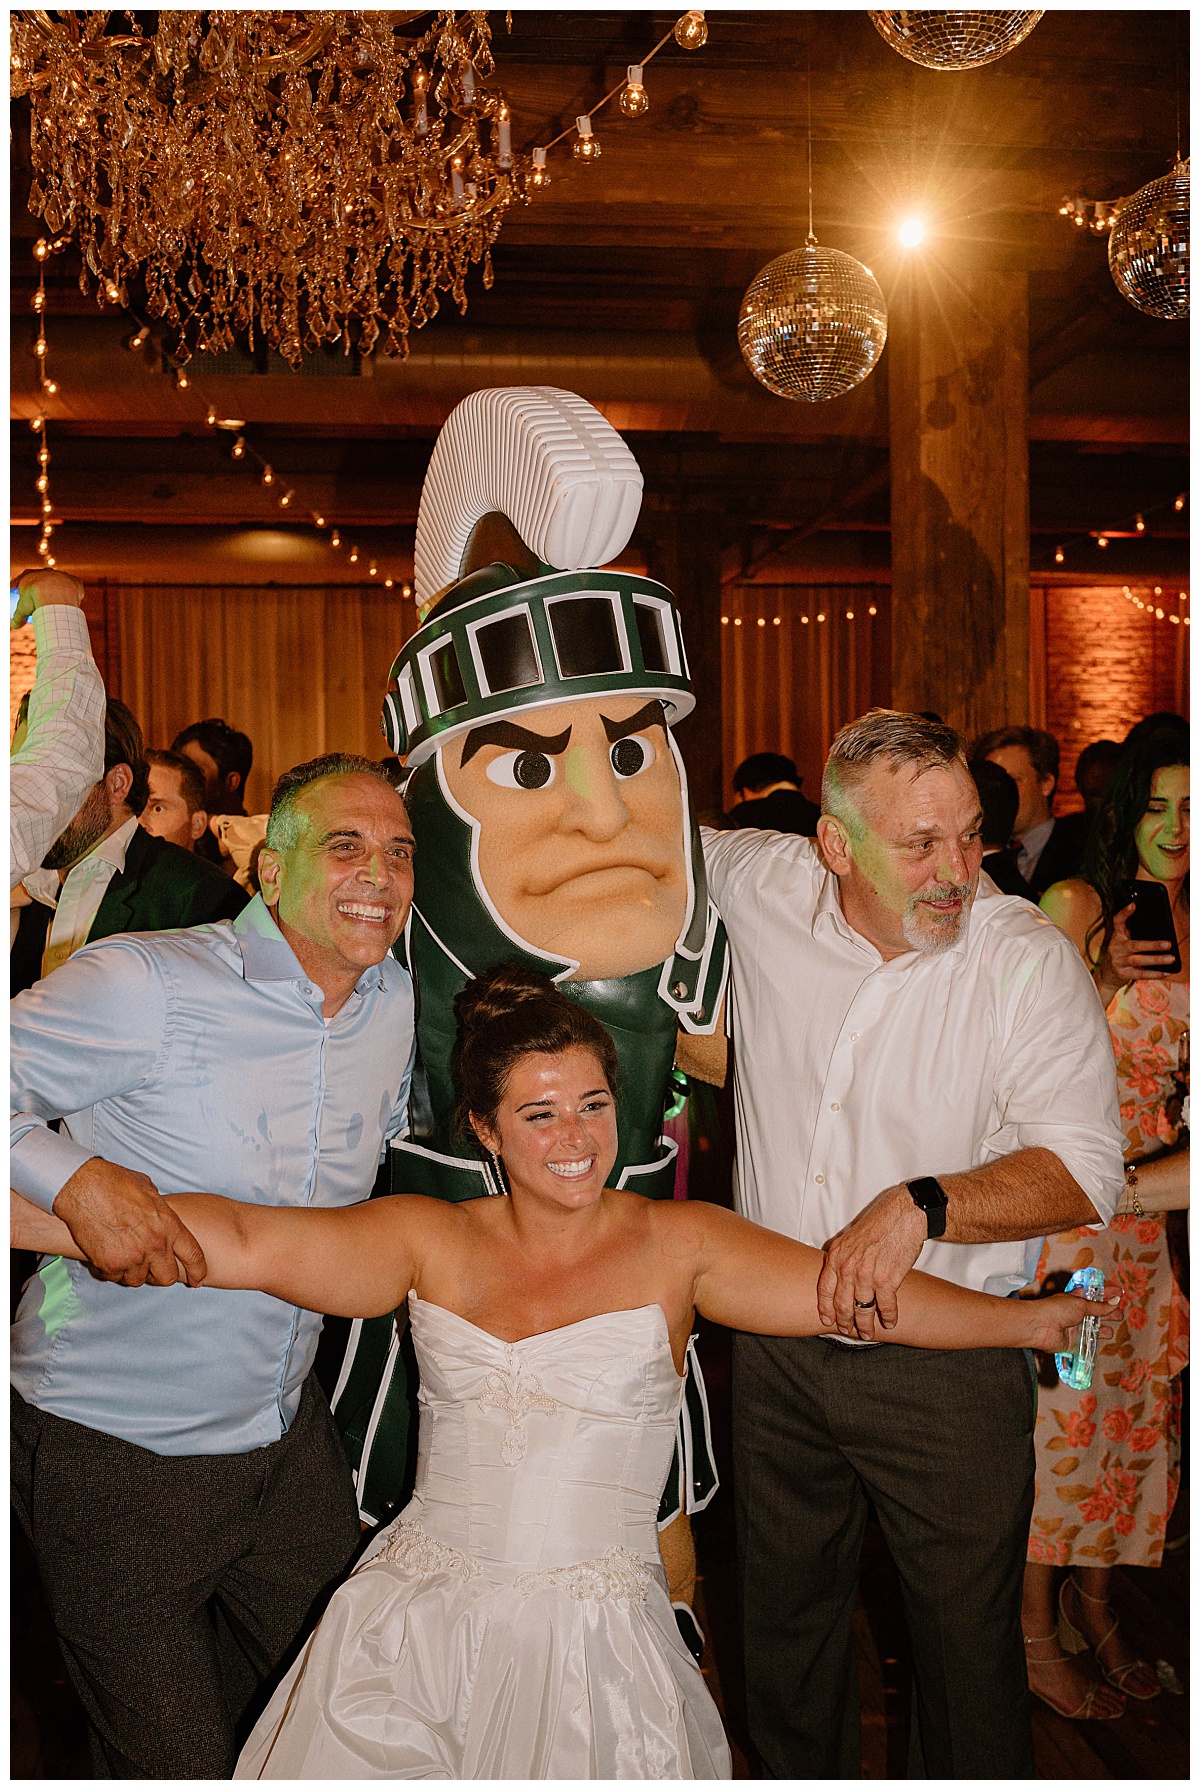 U of Michigan mascot Sparkie dances during reception at Bridgeport Art Center wedding